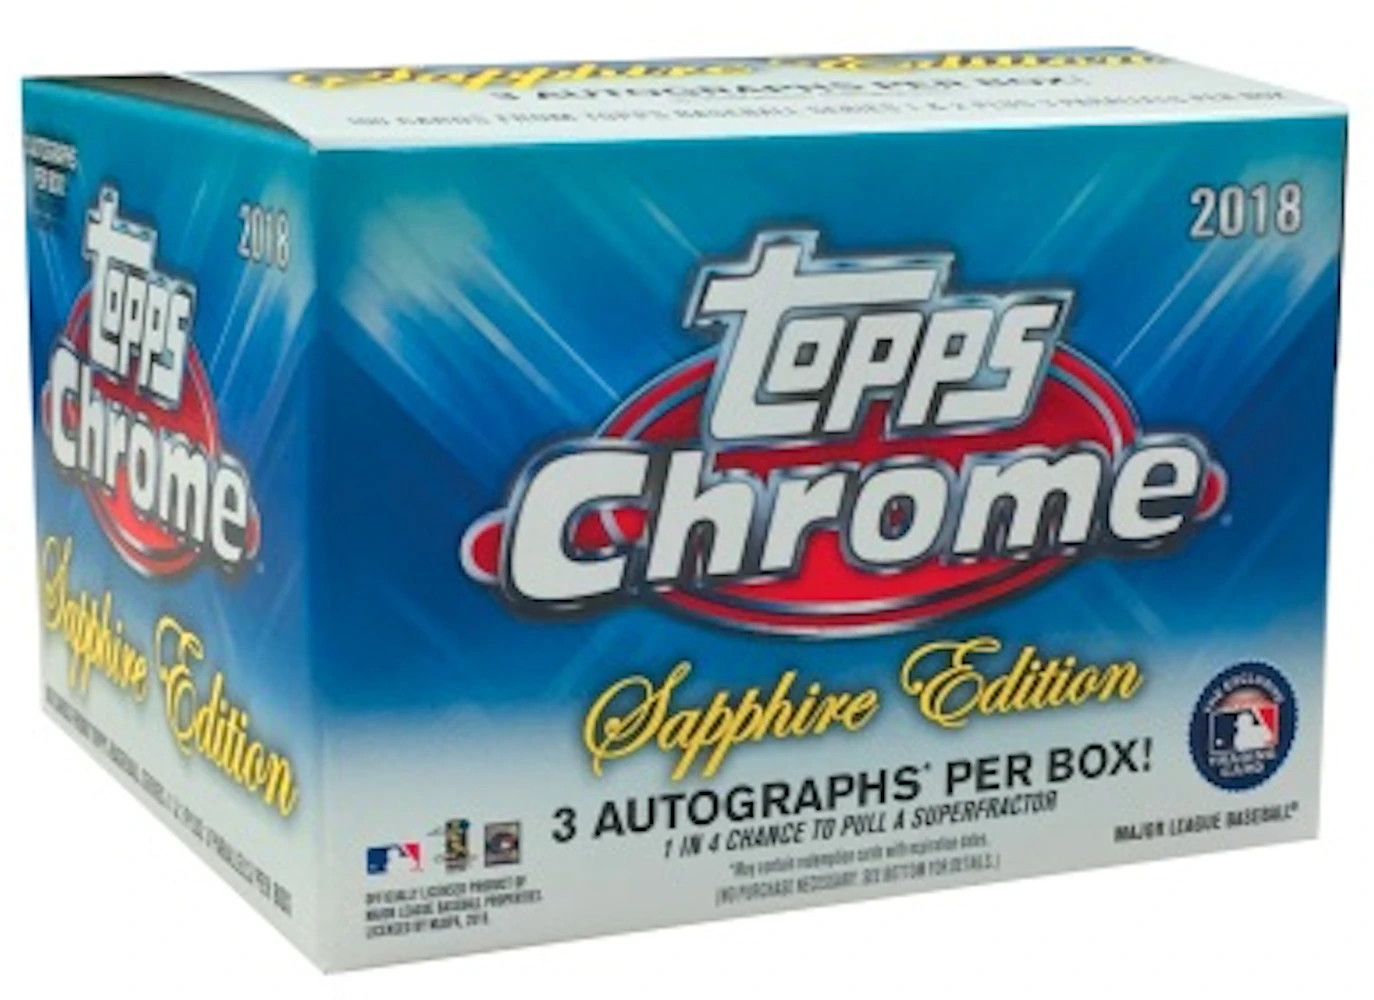 2018 Topps Chrome Baseball Hobby Box - BP Sports Cards and Memorabilia, Inc.